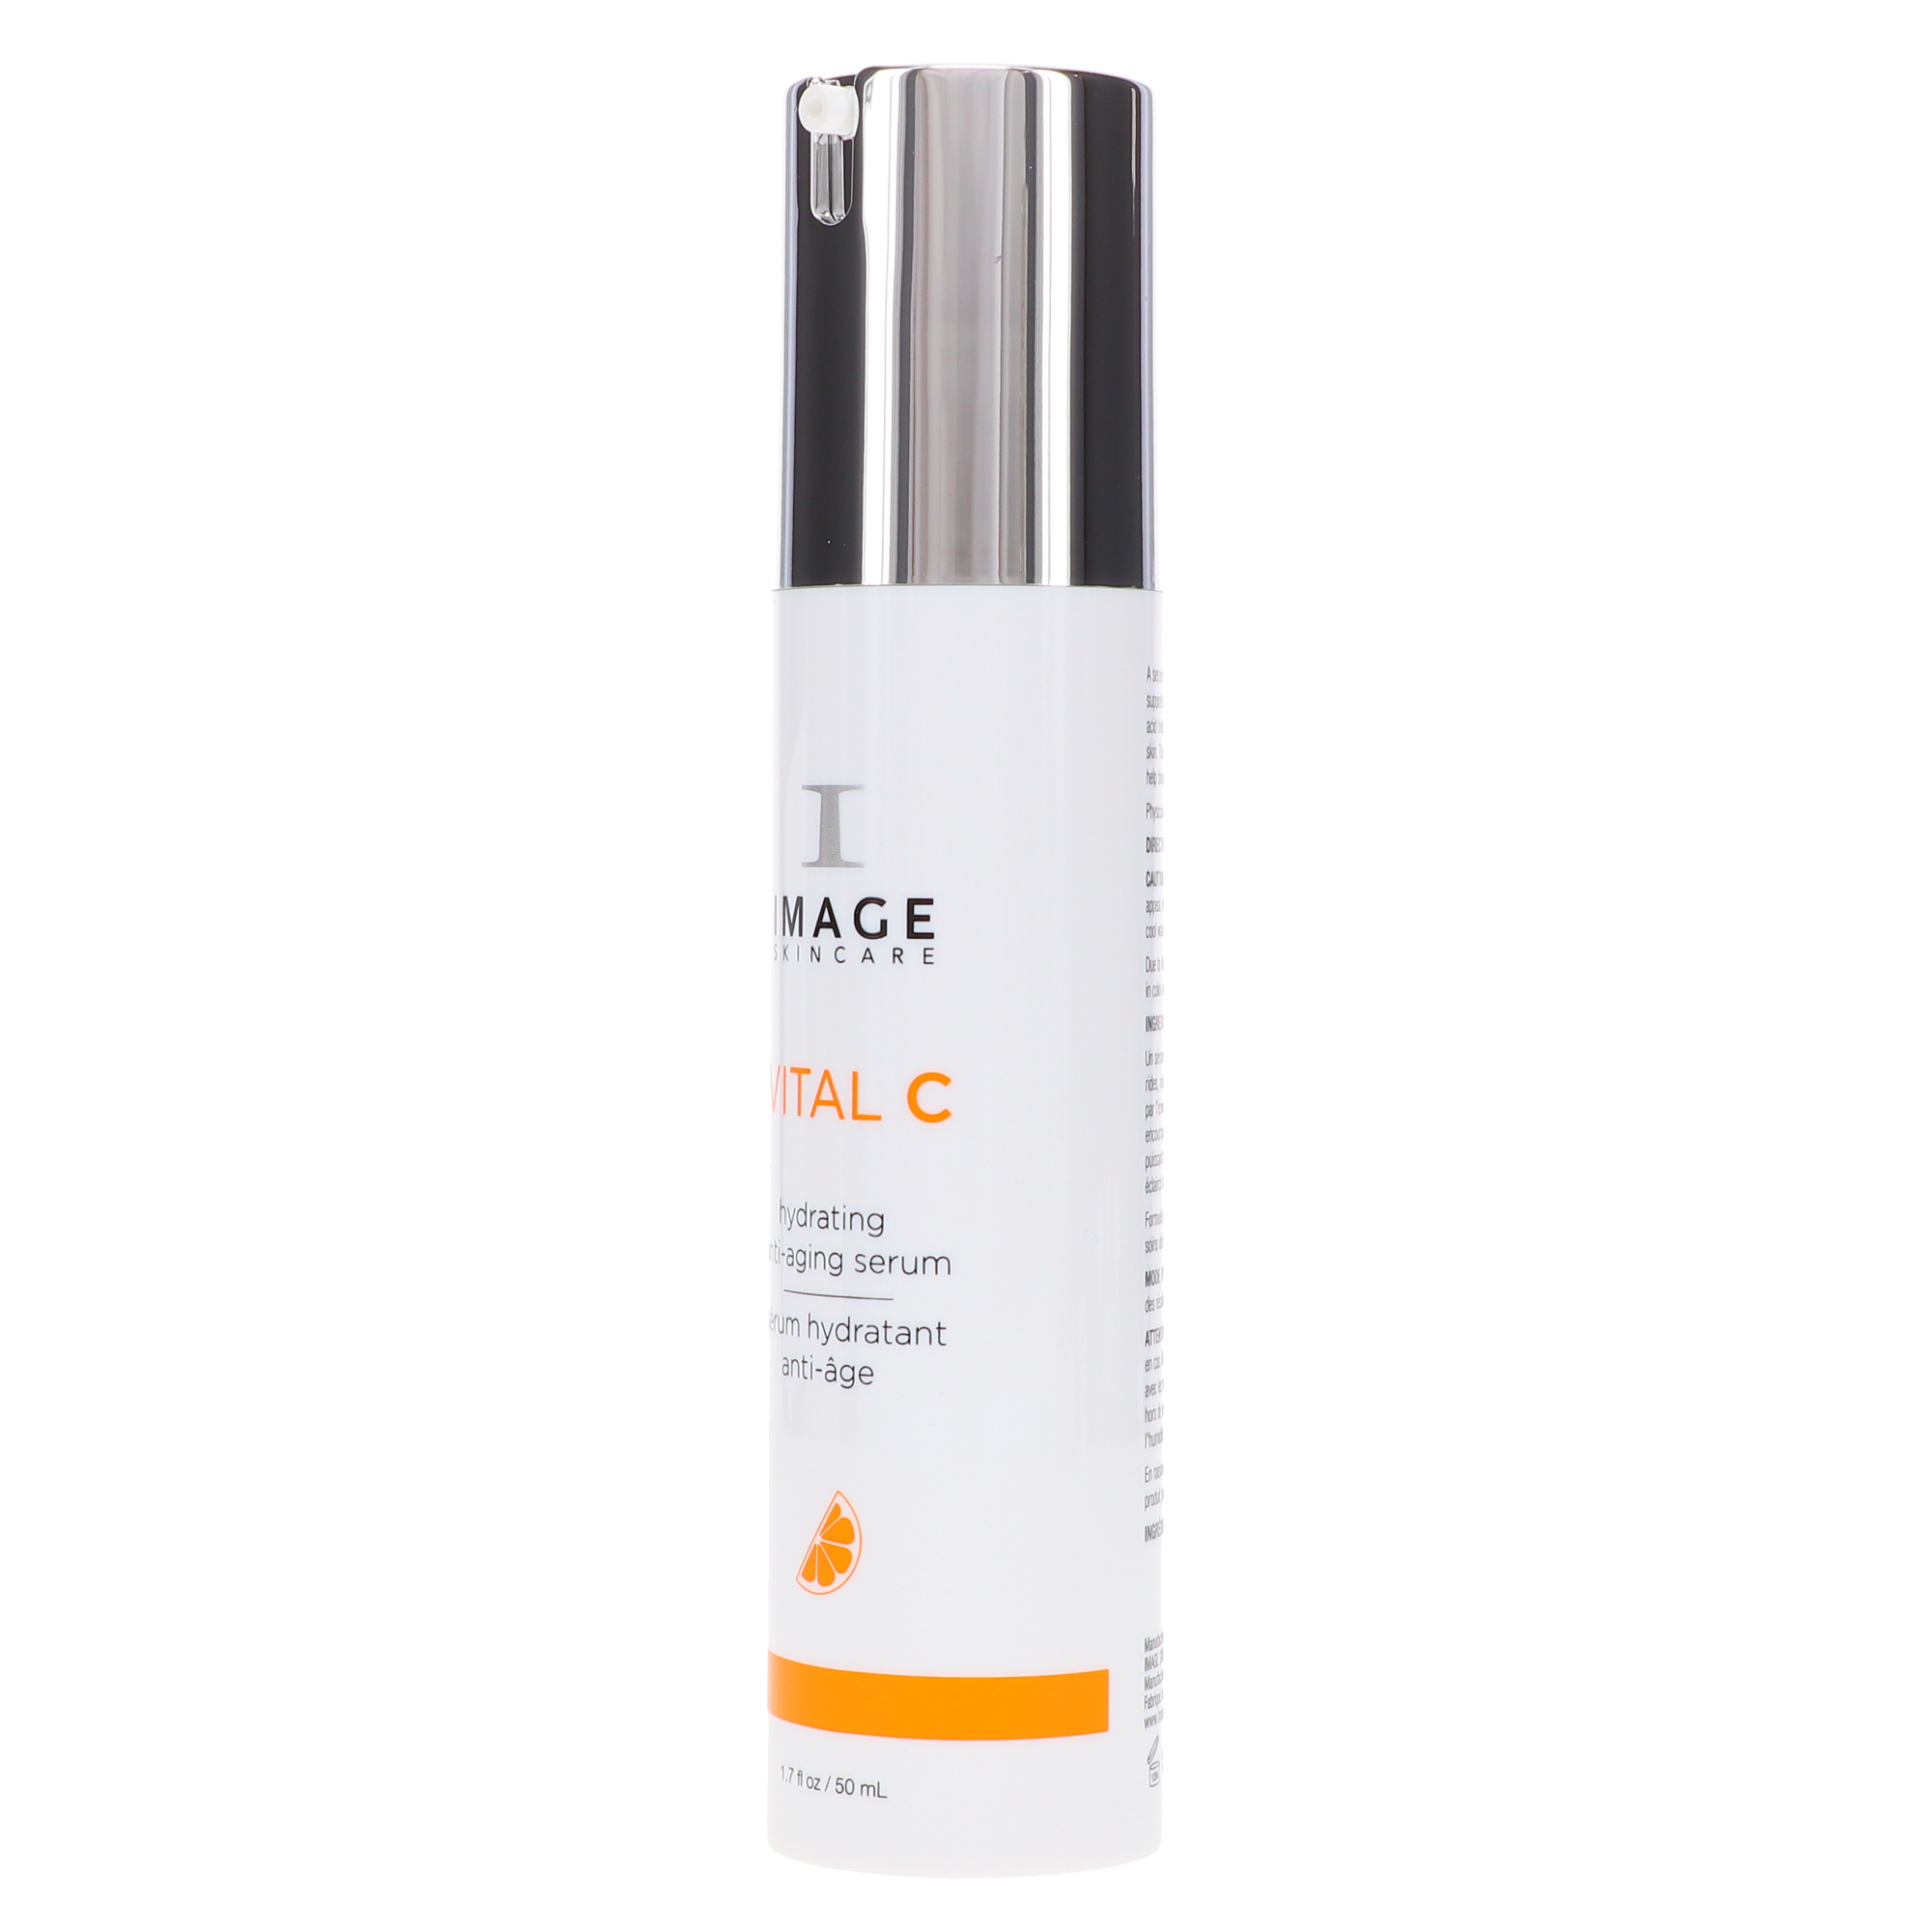 IMAGE Skincare Vital C Hydrating Anti Aging Serum 1.7 oz - image 5 of 9